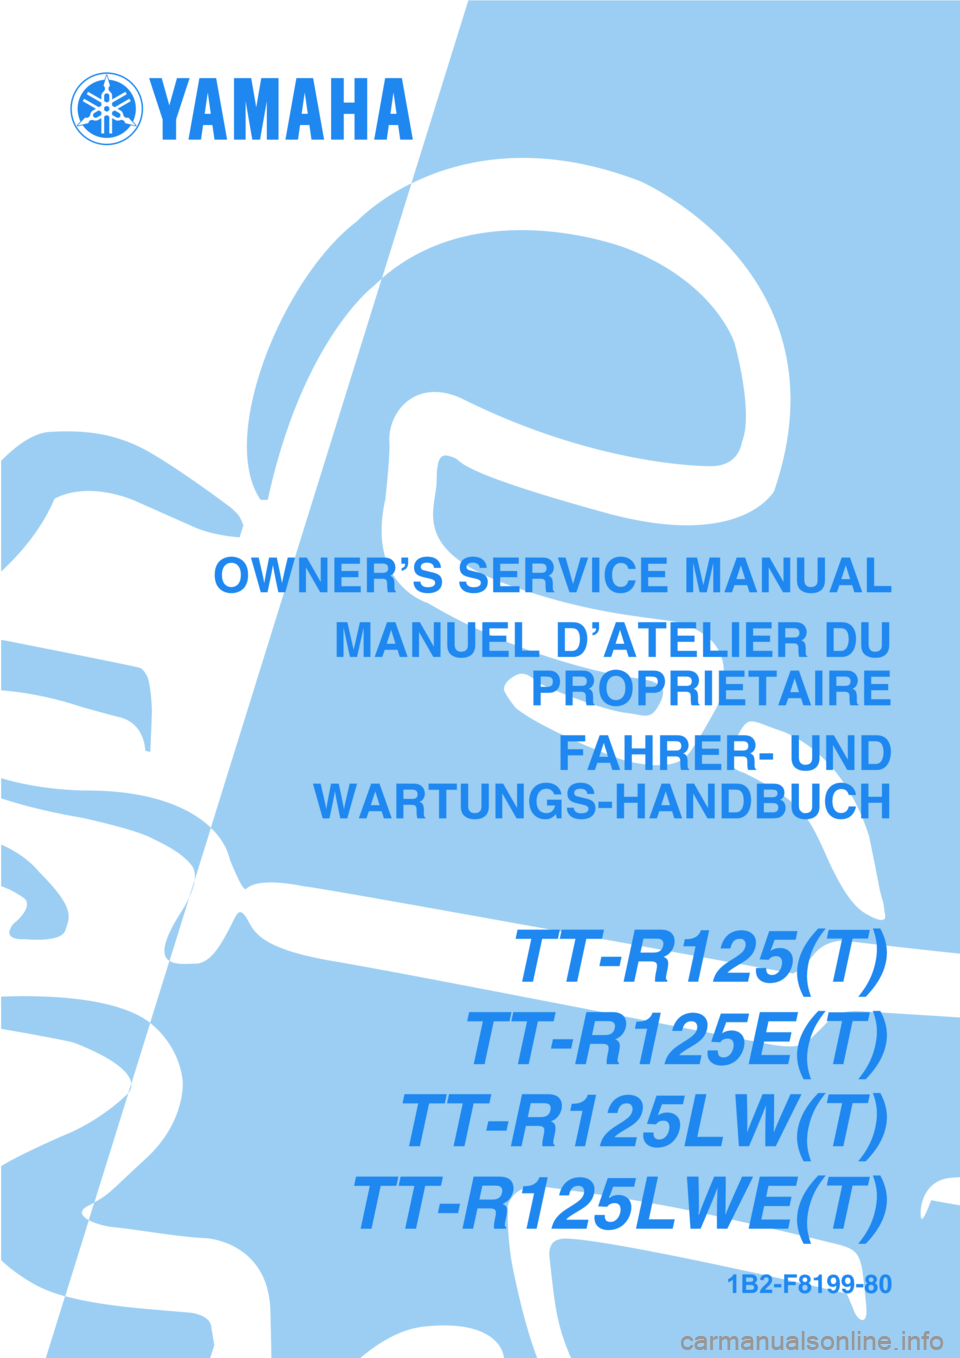 YAMAHA TTR125 2005  Owners Manual 1B2-F8199-80
OWNER’S SERVICE MANUALMANUEL D’ATELIER DU PROPRIETAIRE
FAHRER- UND
WARTUNGS-HANDBUCH
TT-R125(T)
TT-R125E(T)
TT-R125LW(T)
TT-R125LWE(T) 